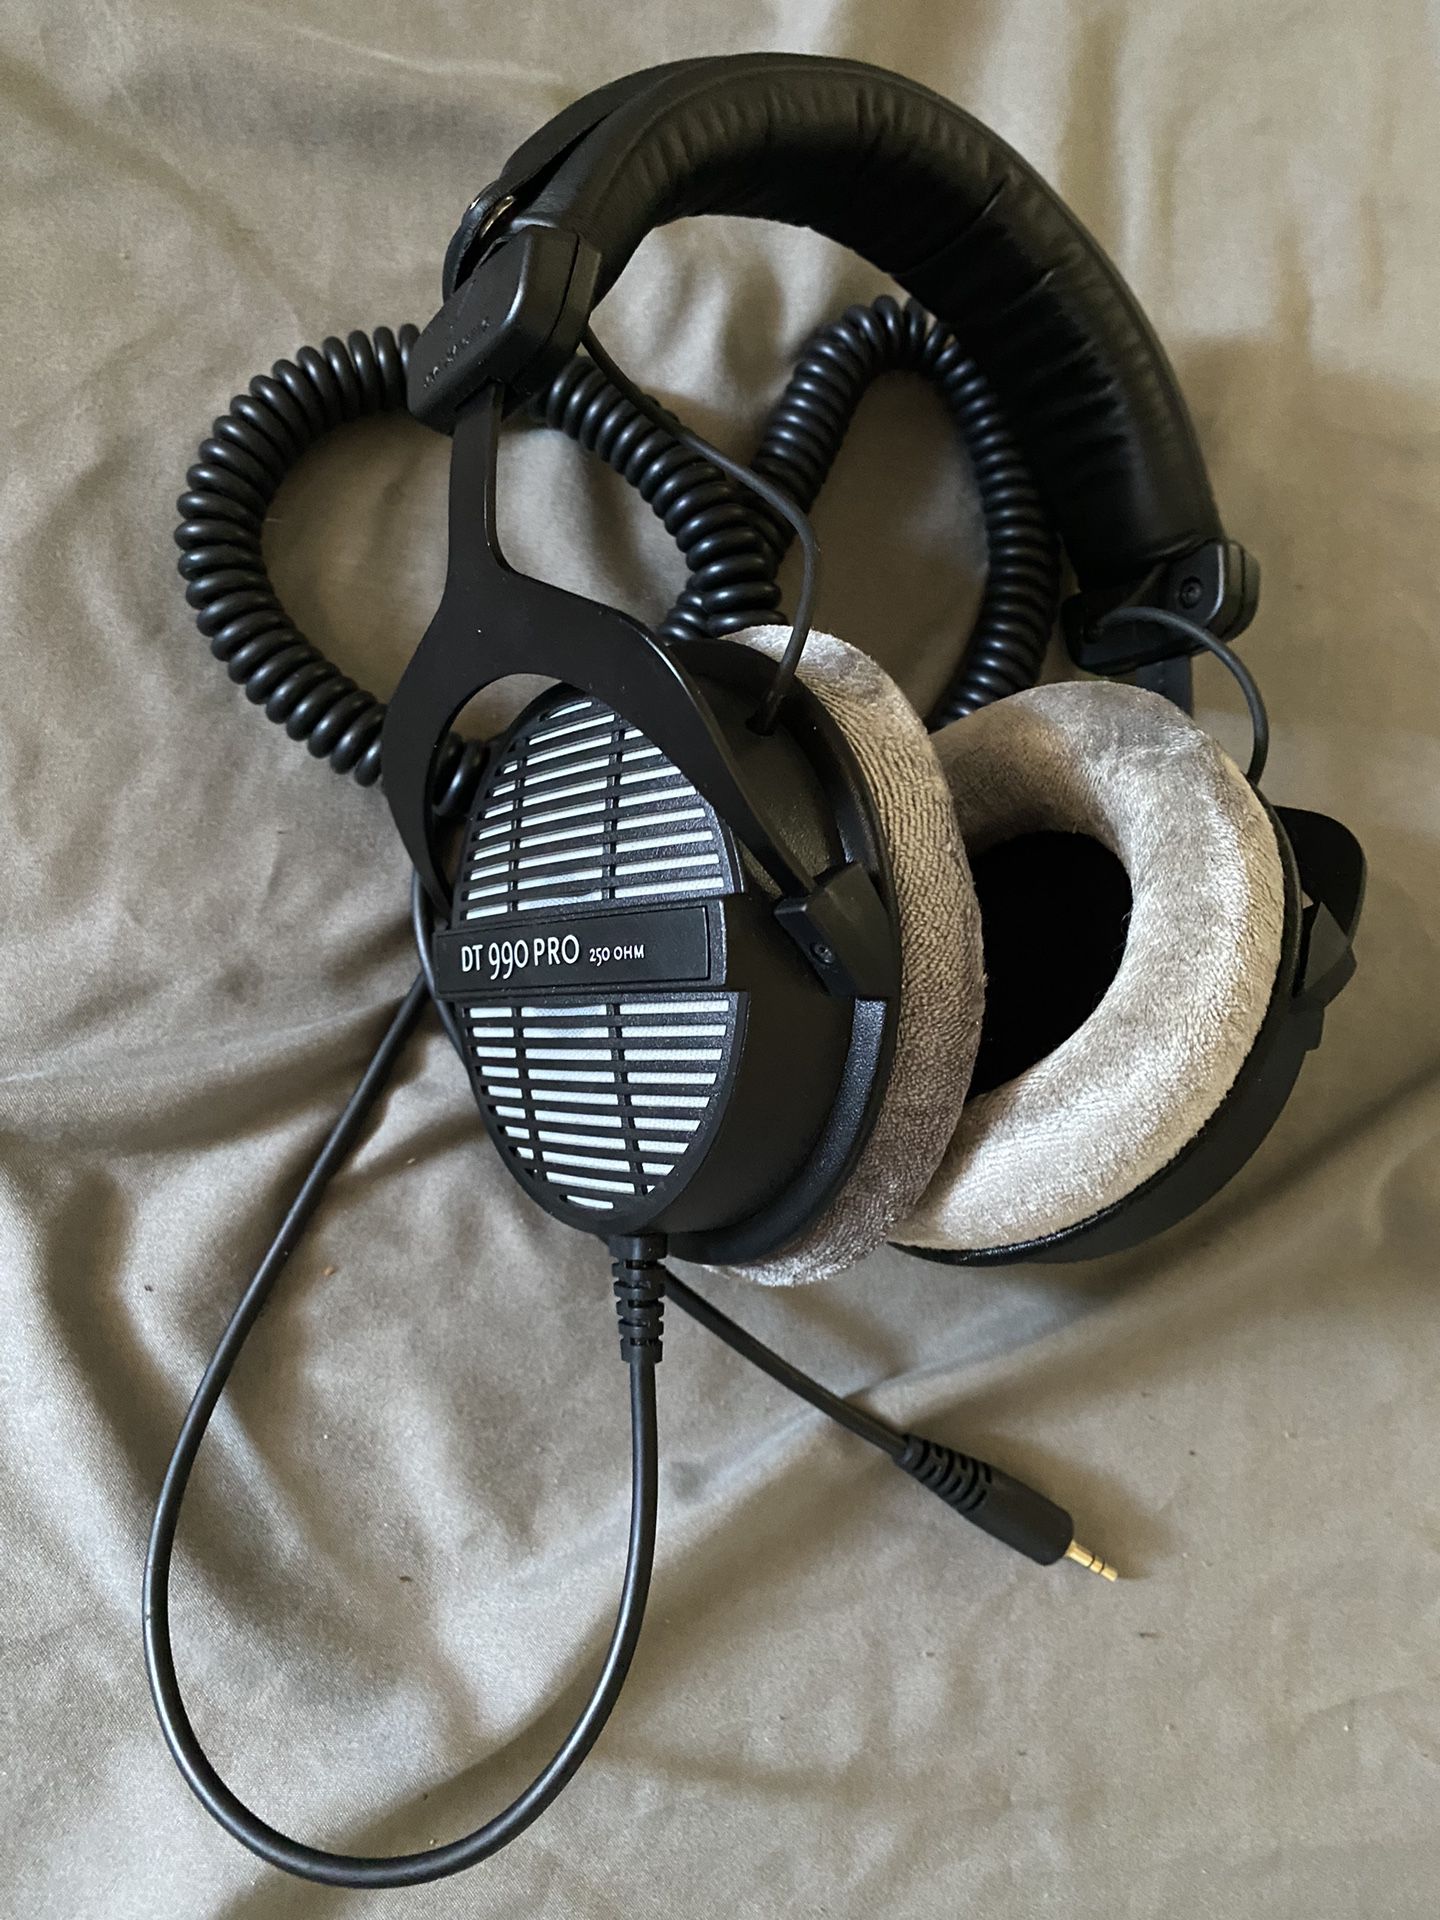 Beyerdynamic DT 990 PRO Studio Open-Back Headphones 250 ohm